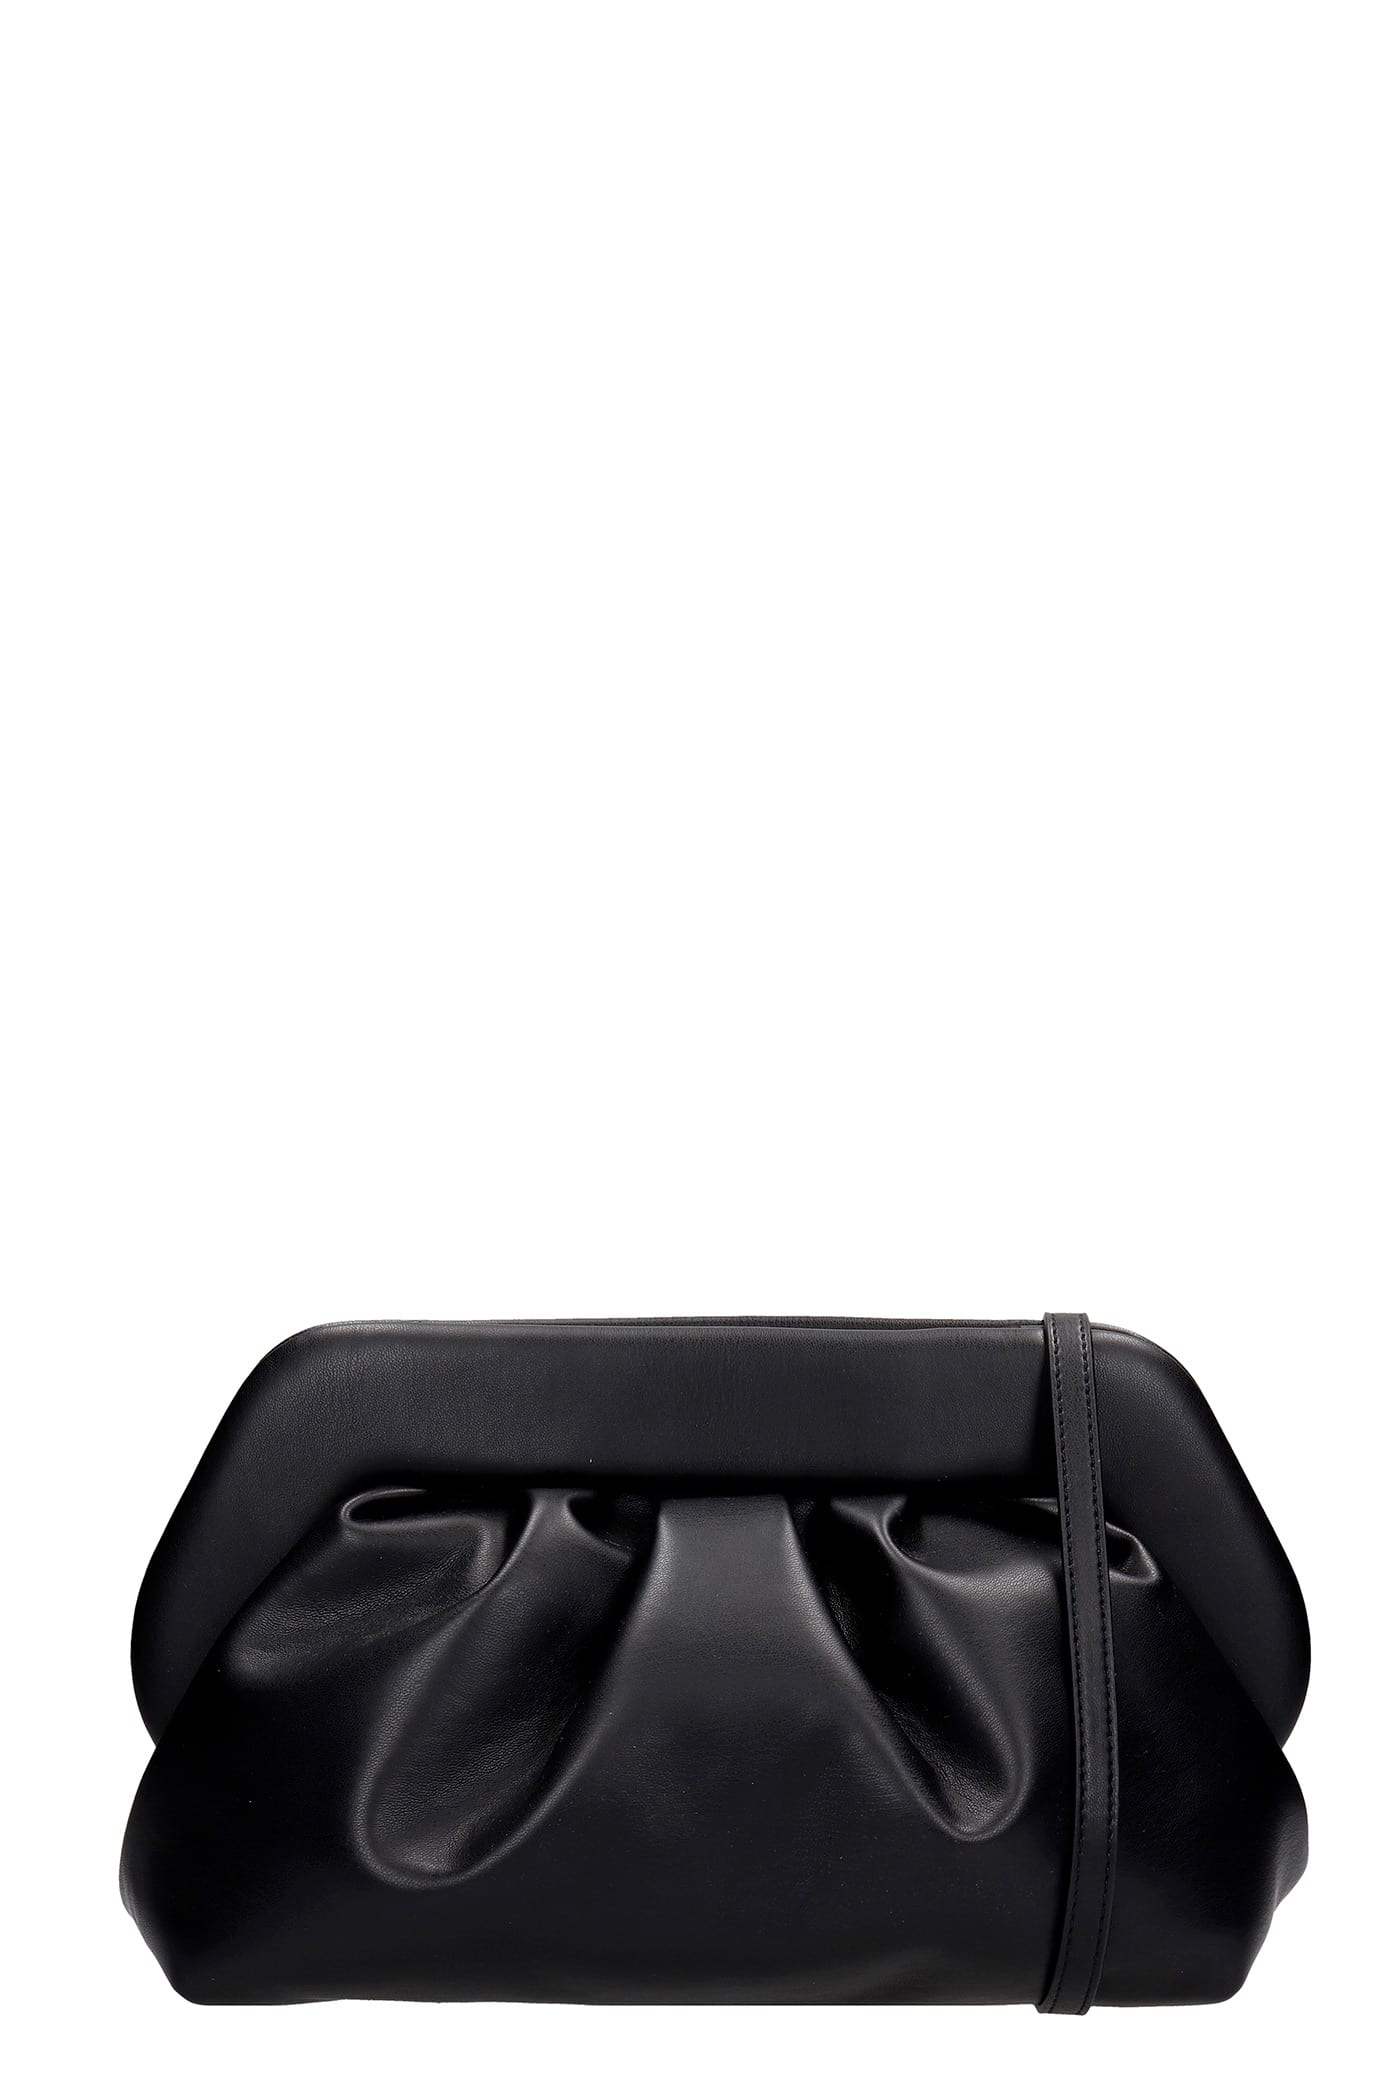 THEMOIRè Bios Basic Shoulder Bag In Black Leather